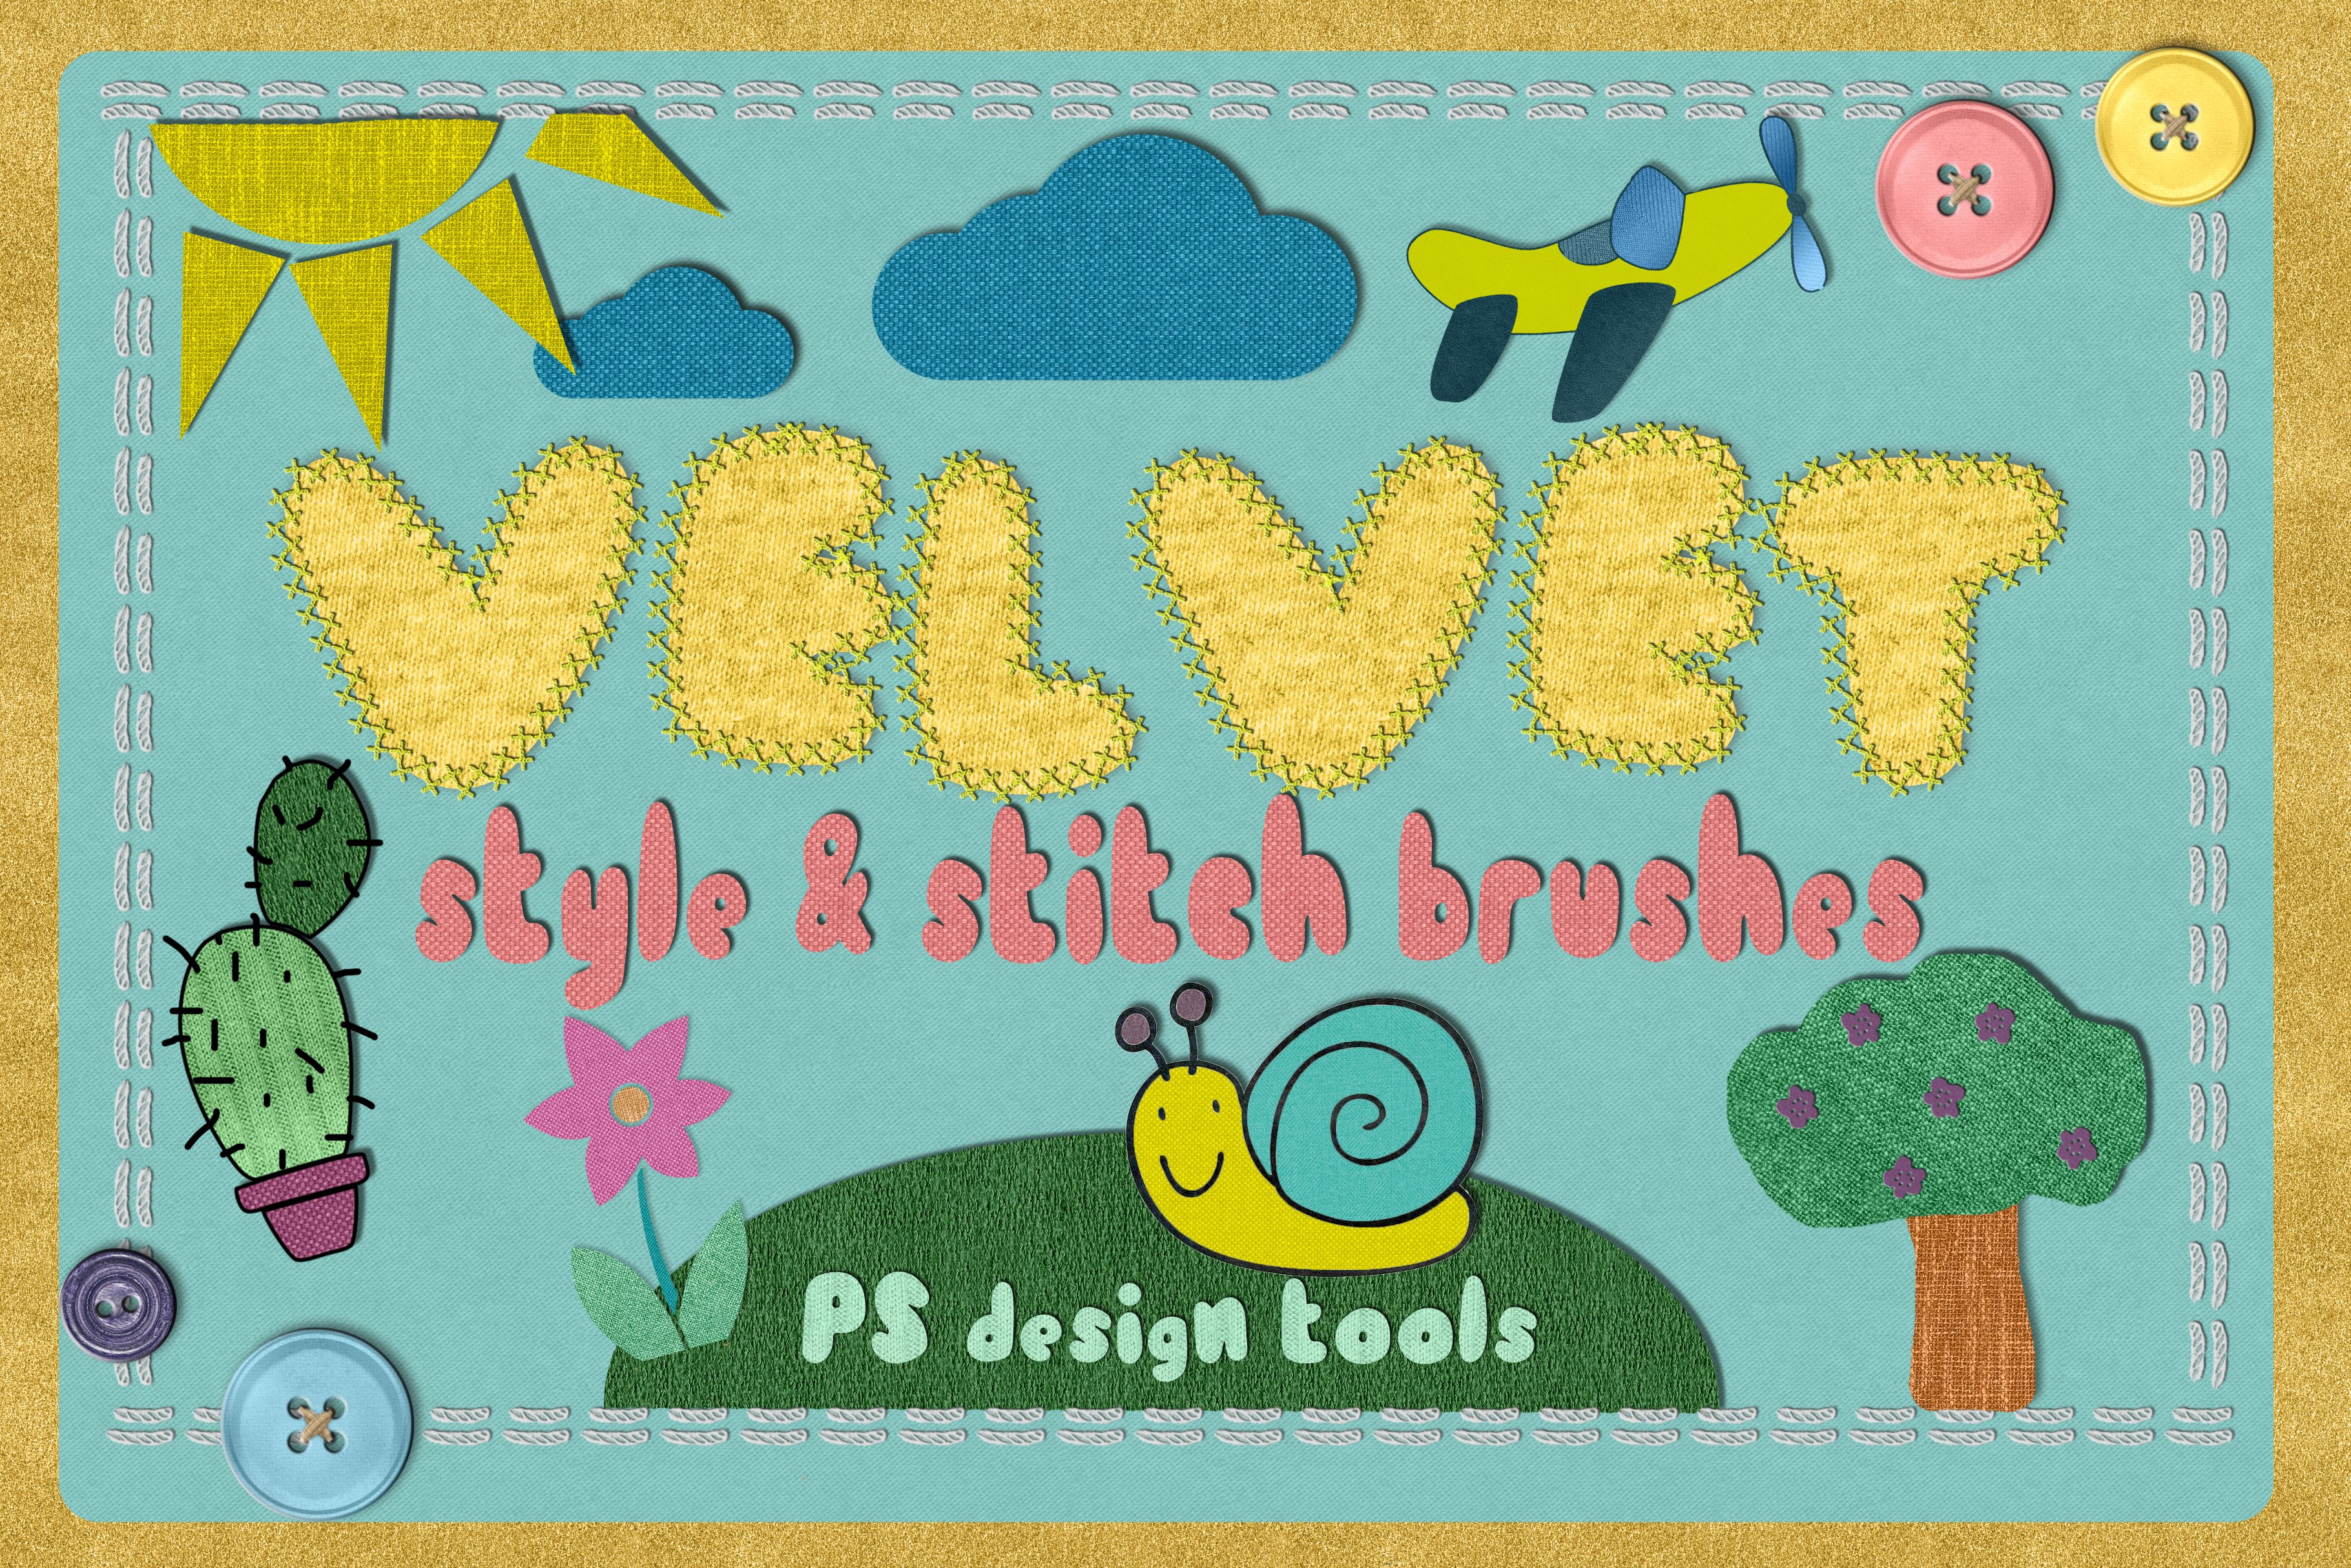 Velvet STYLES & STITCH BRUSHES PScover image.